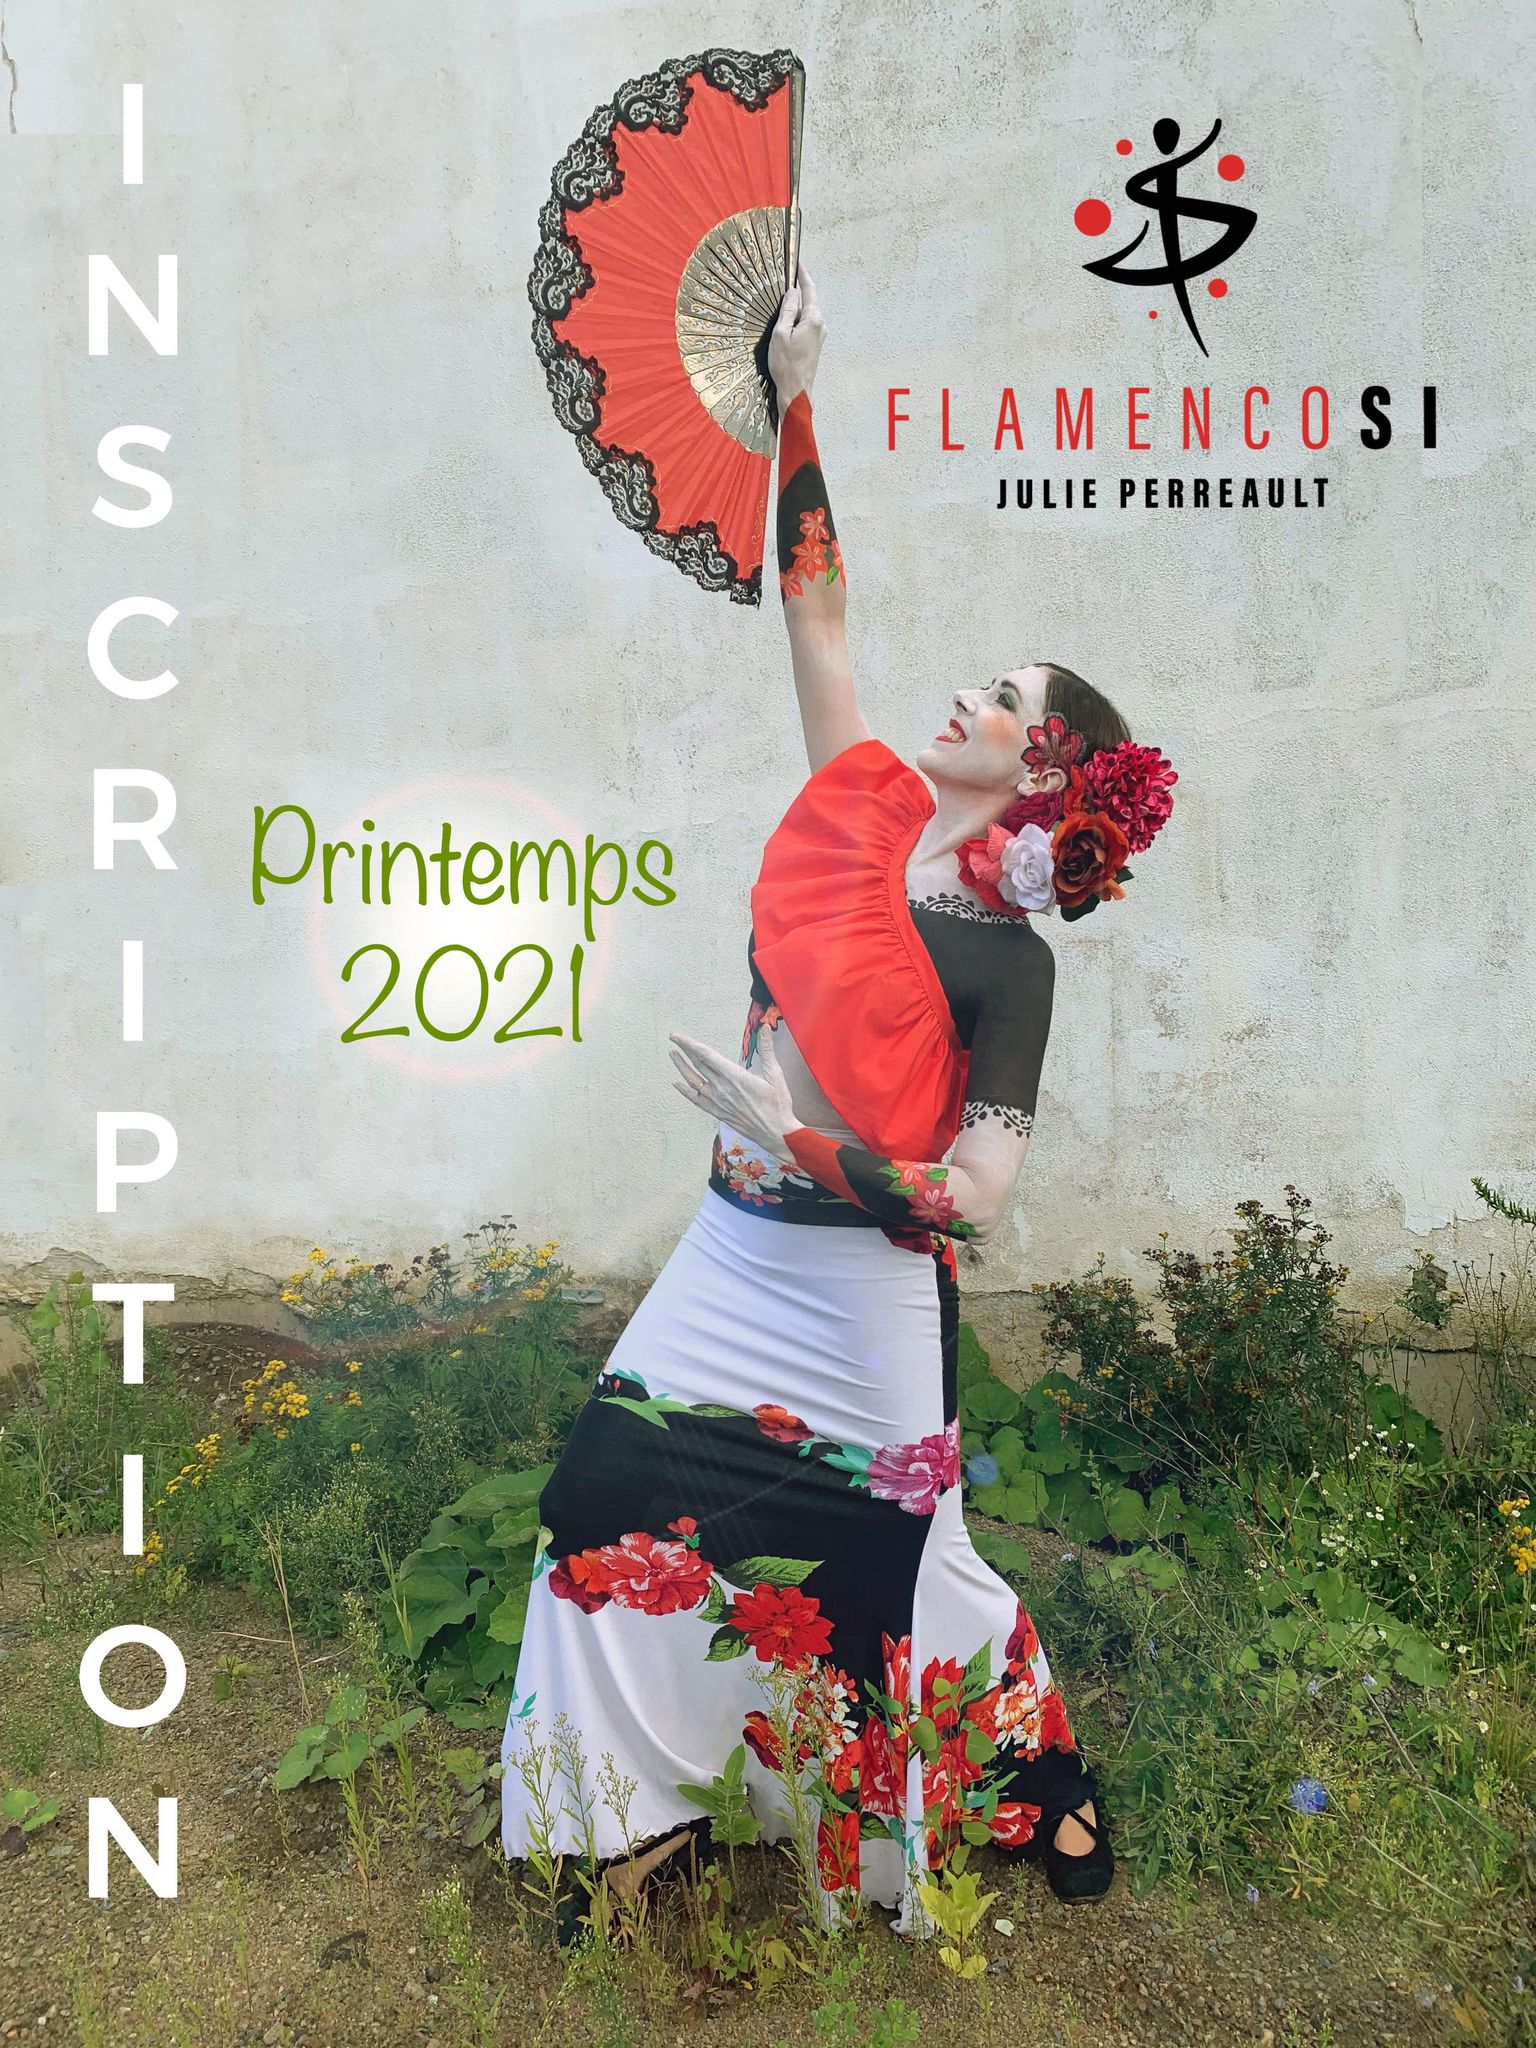 Cours de danse flamenca